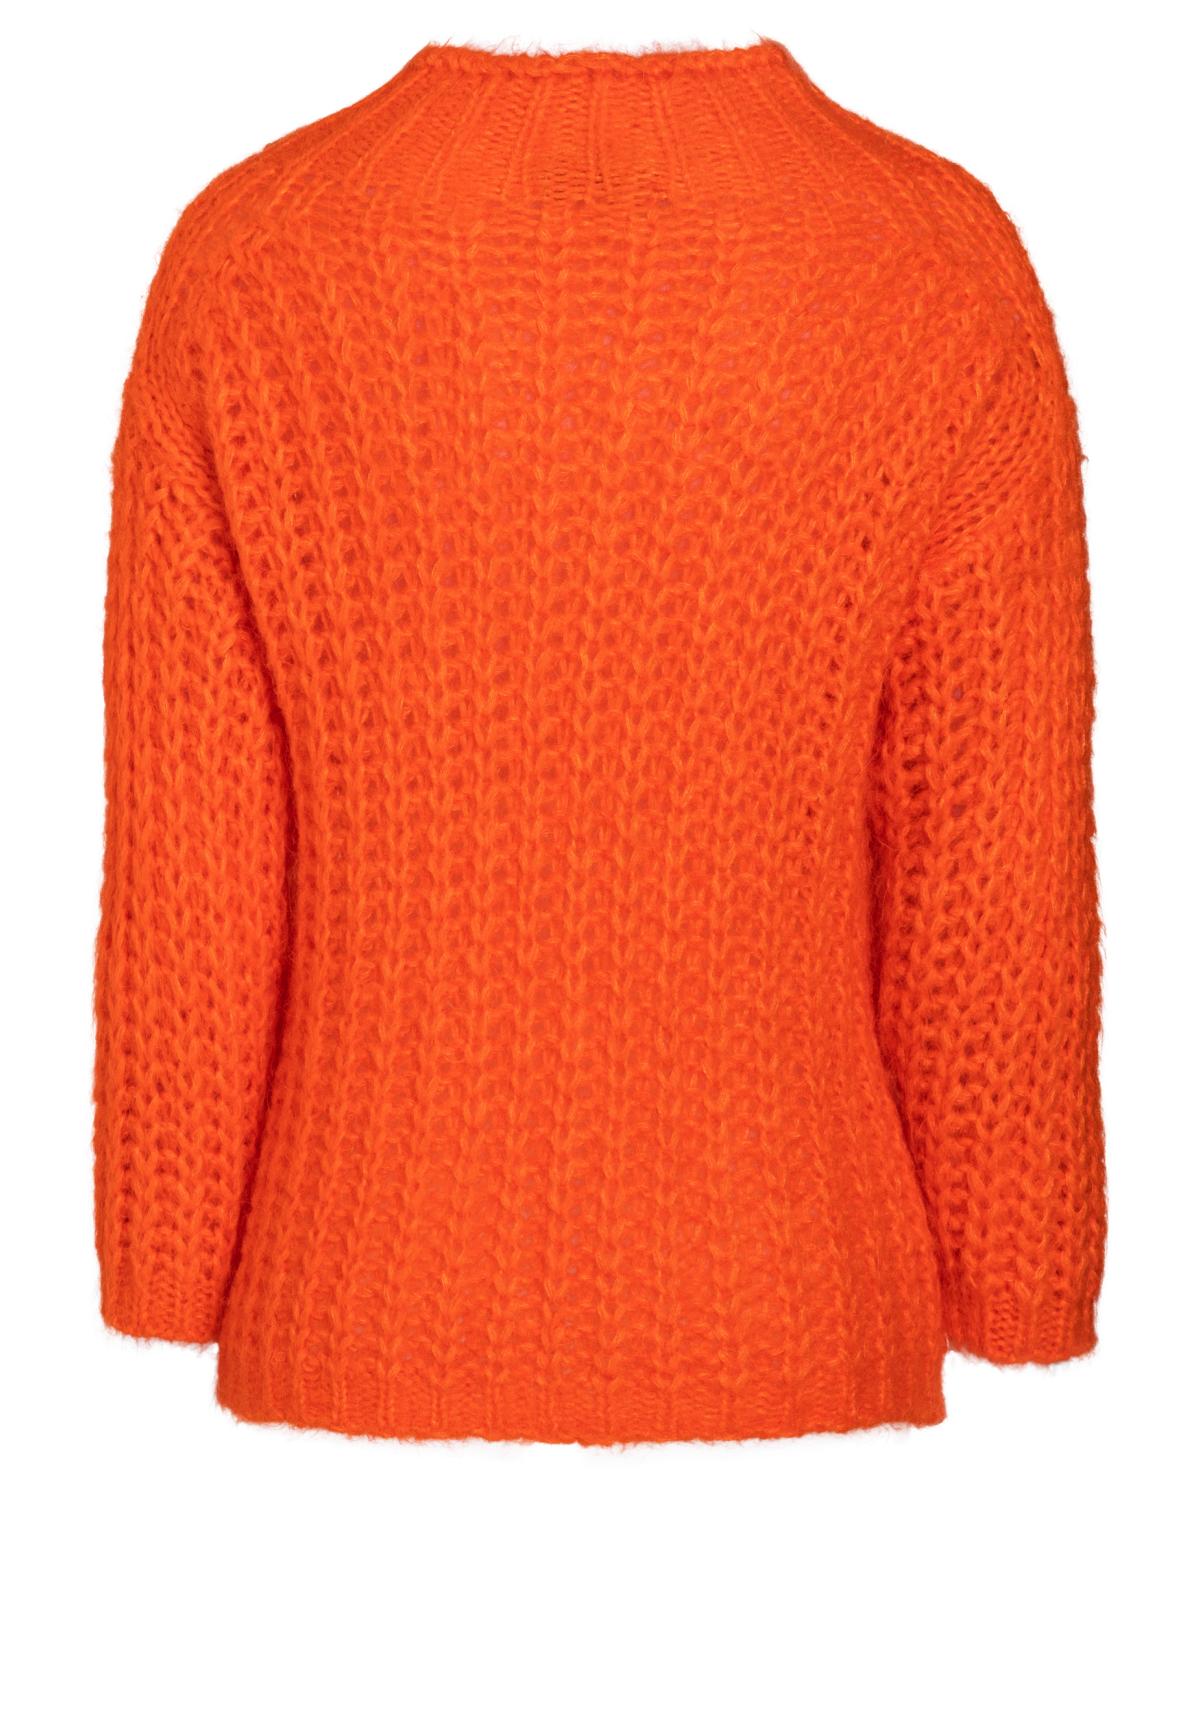 Orange mohair sweater Bilmi with stand up collar | Ana Alcazar